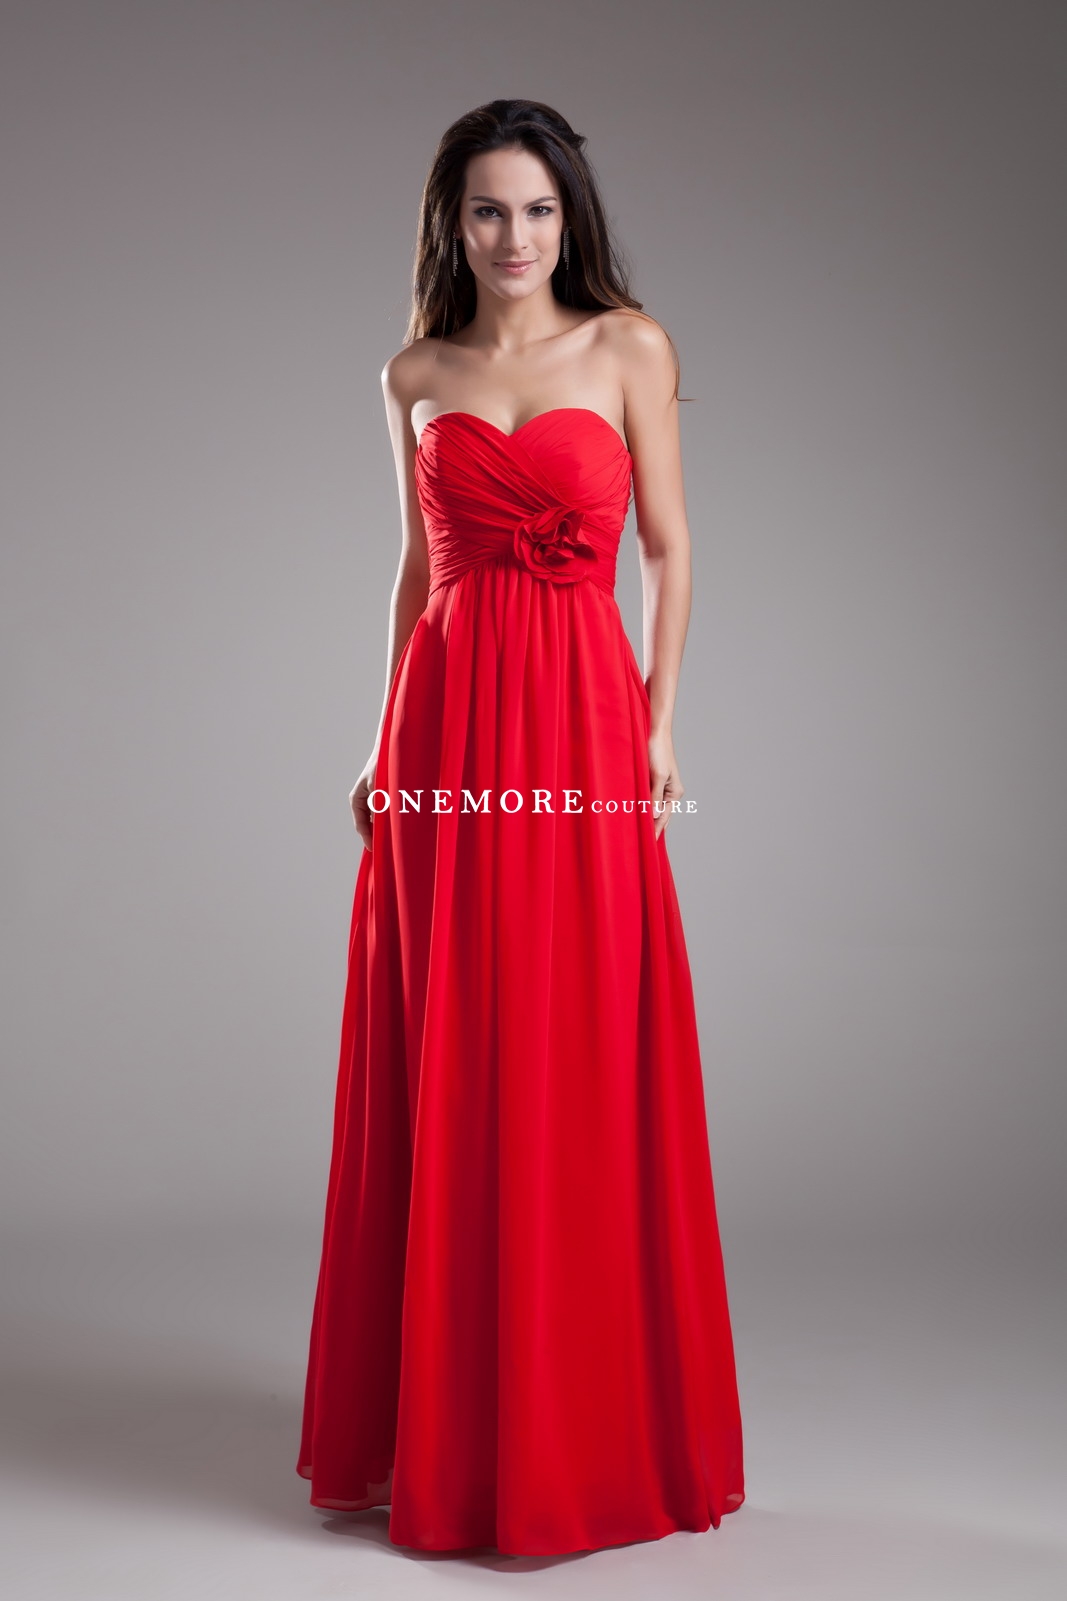 Empire Waist Style Red Chiffon Bridesmaid Dresses